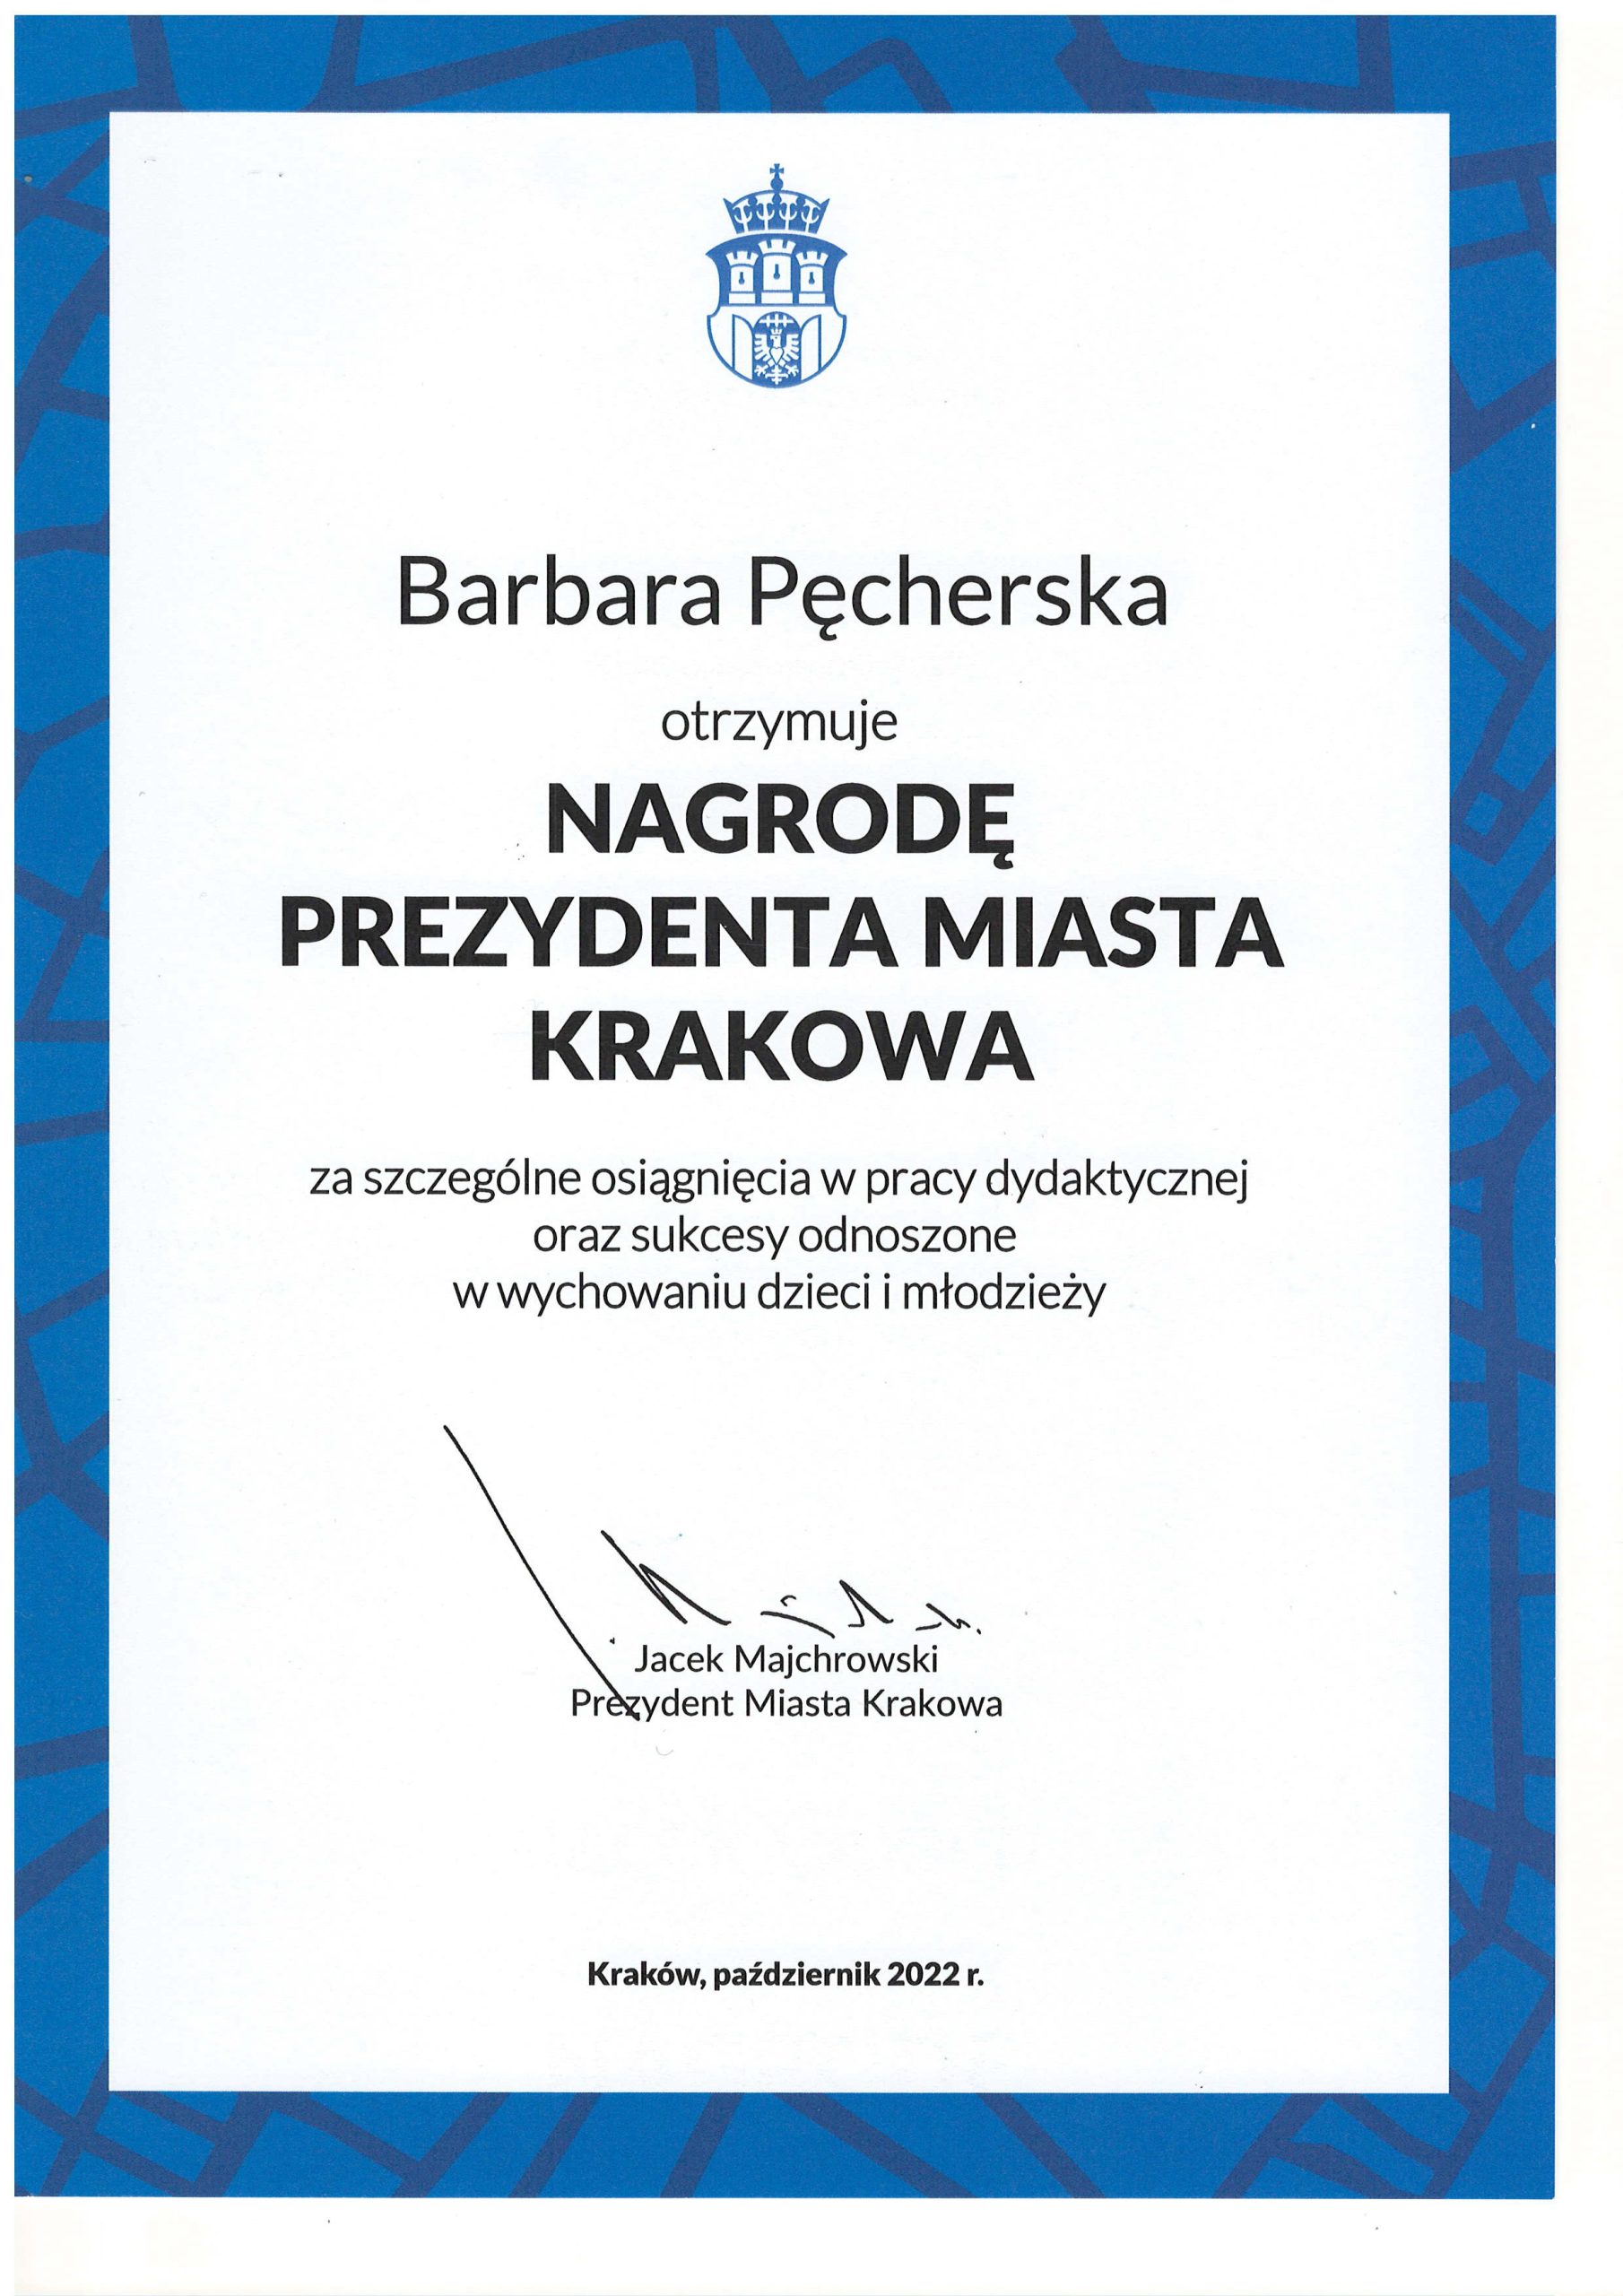 dyplom nagrody prezydenta